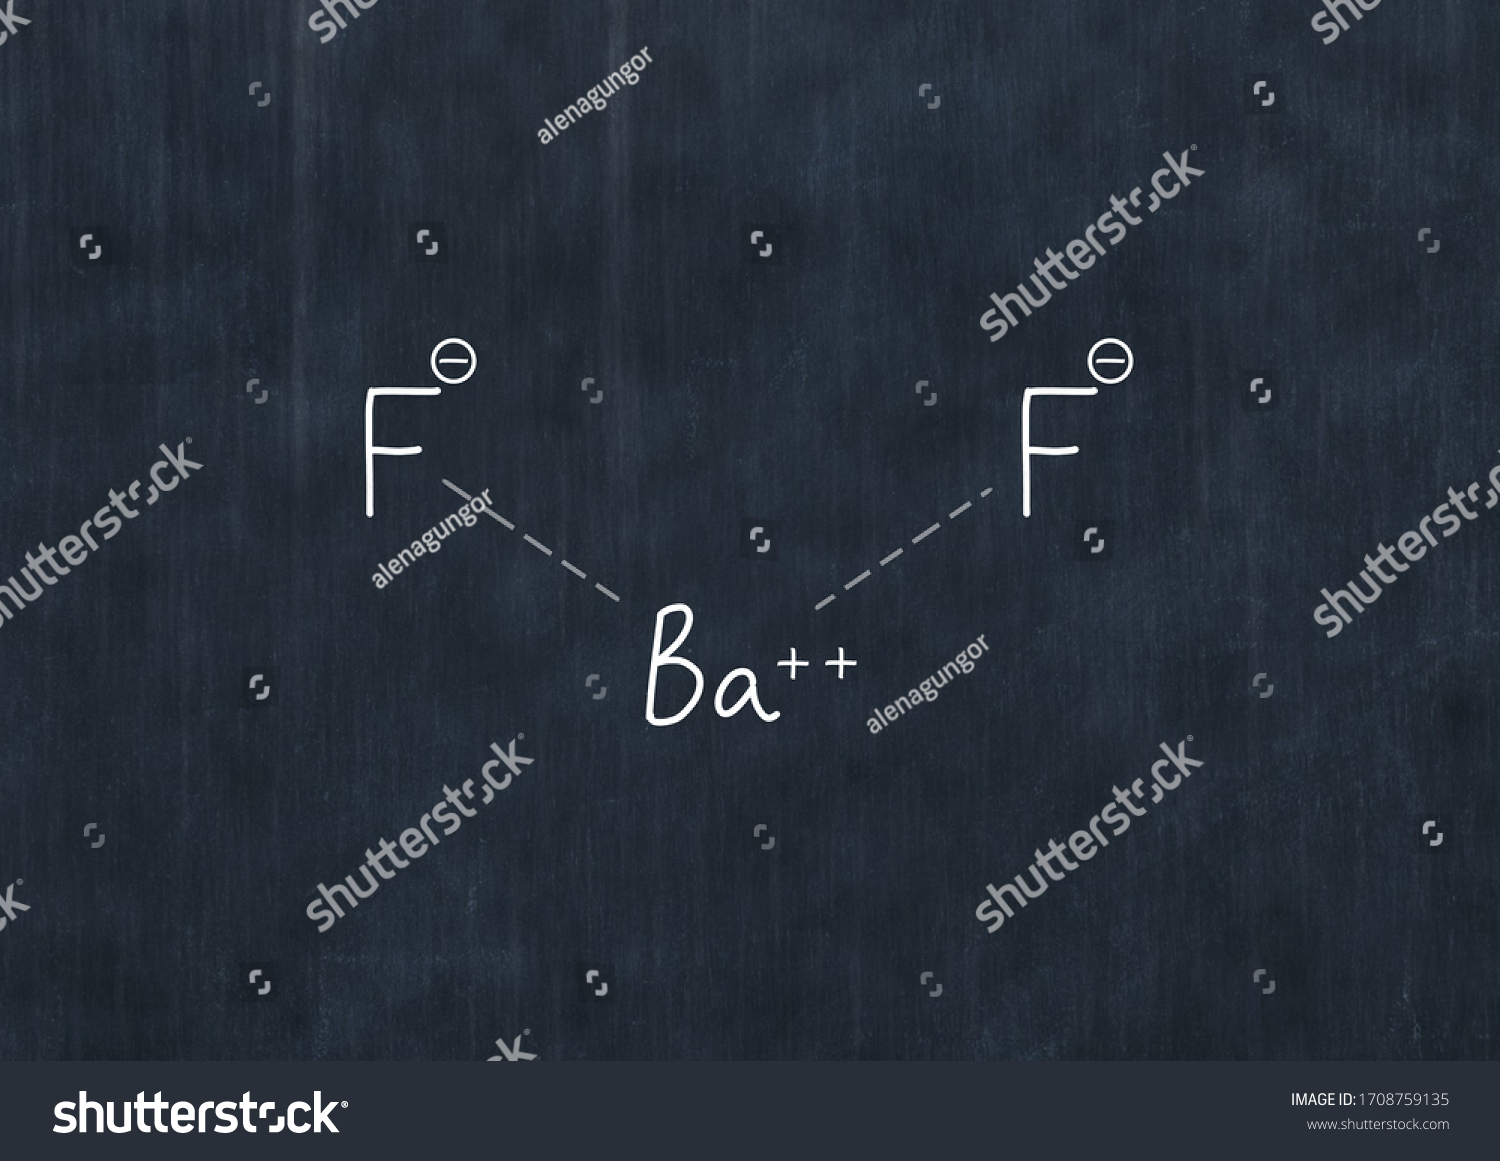 Stock Photo Barium Fluoride Formula Handwritten Chemical Formula On Blackboard Illustration White Background 1708759135 